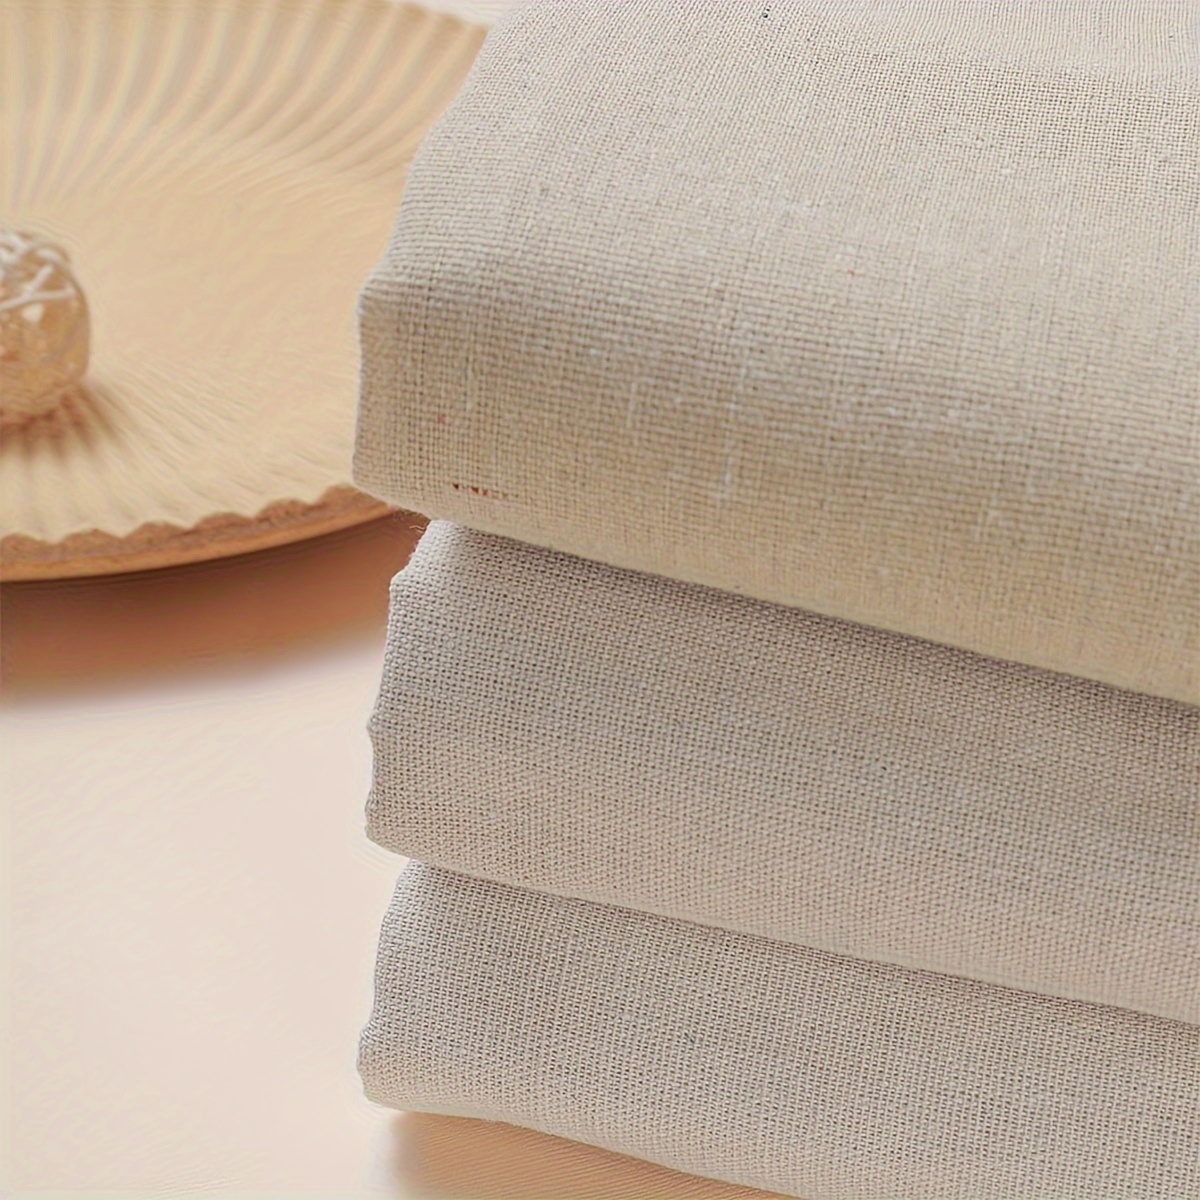 About Linen Fabrics - DE TIAMO